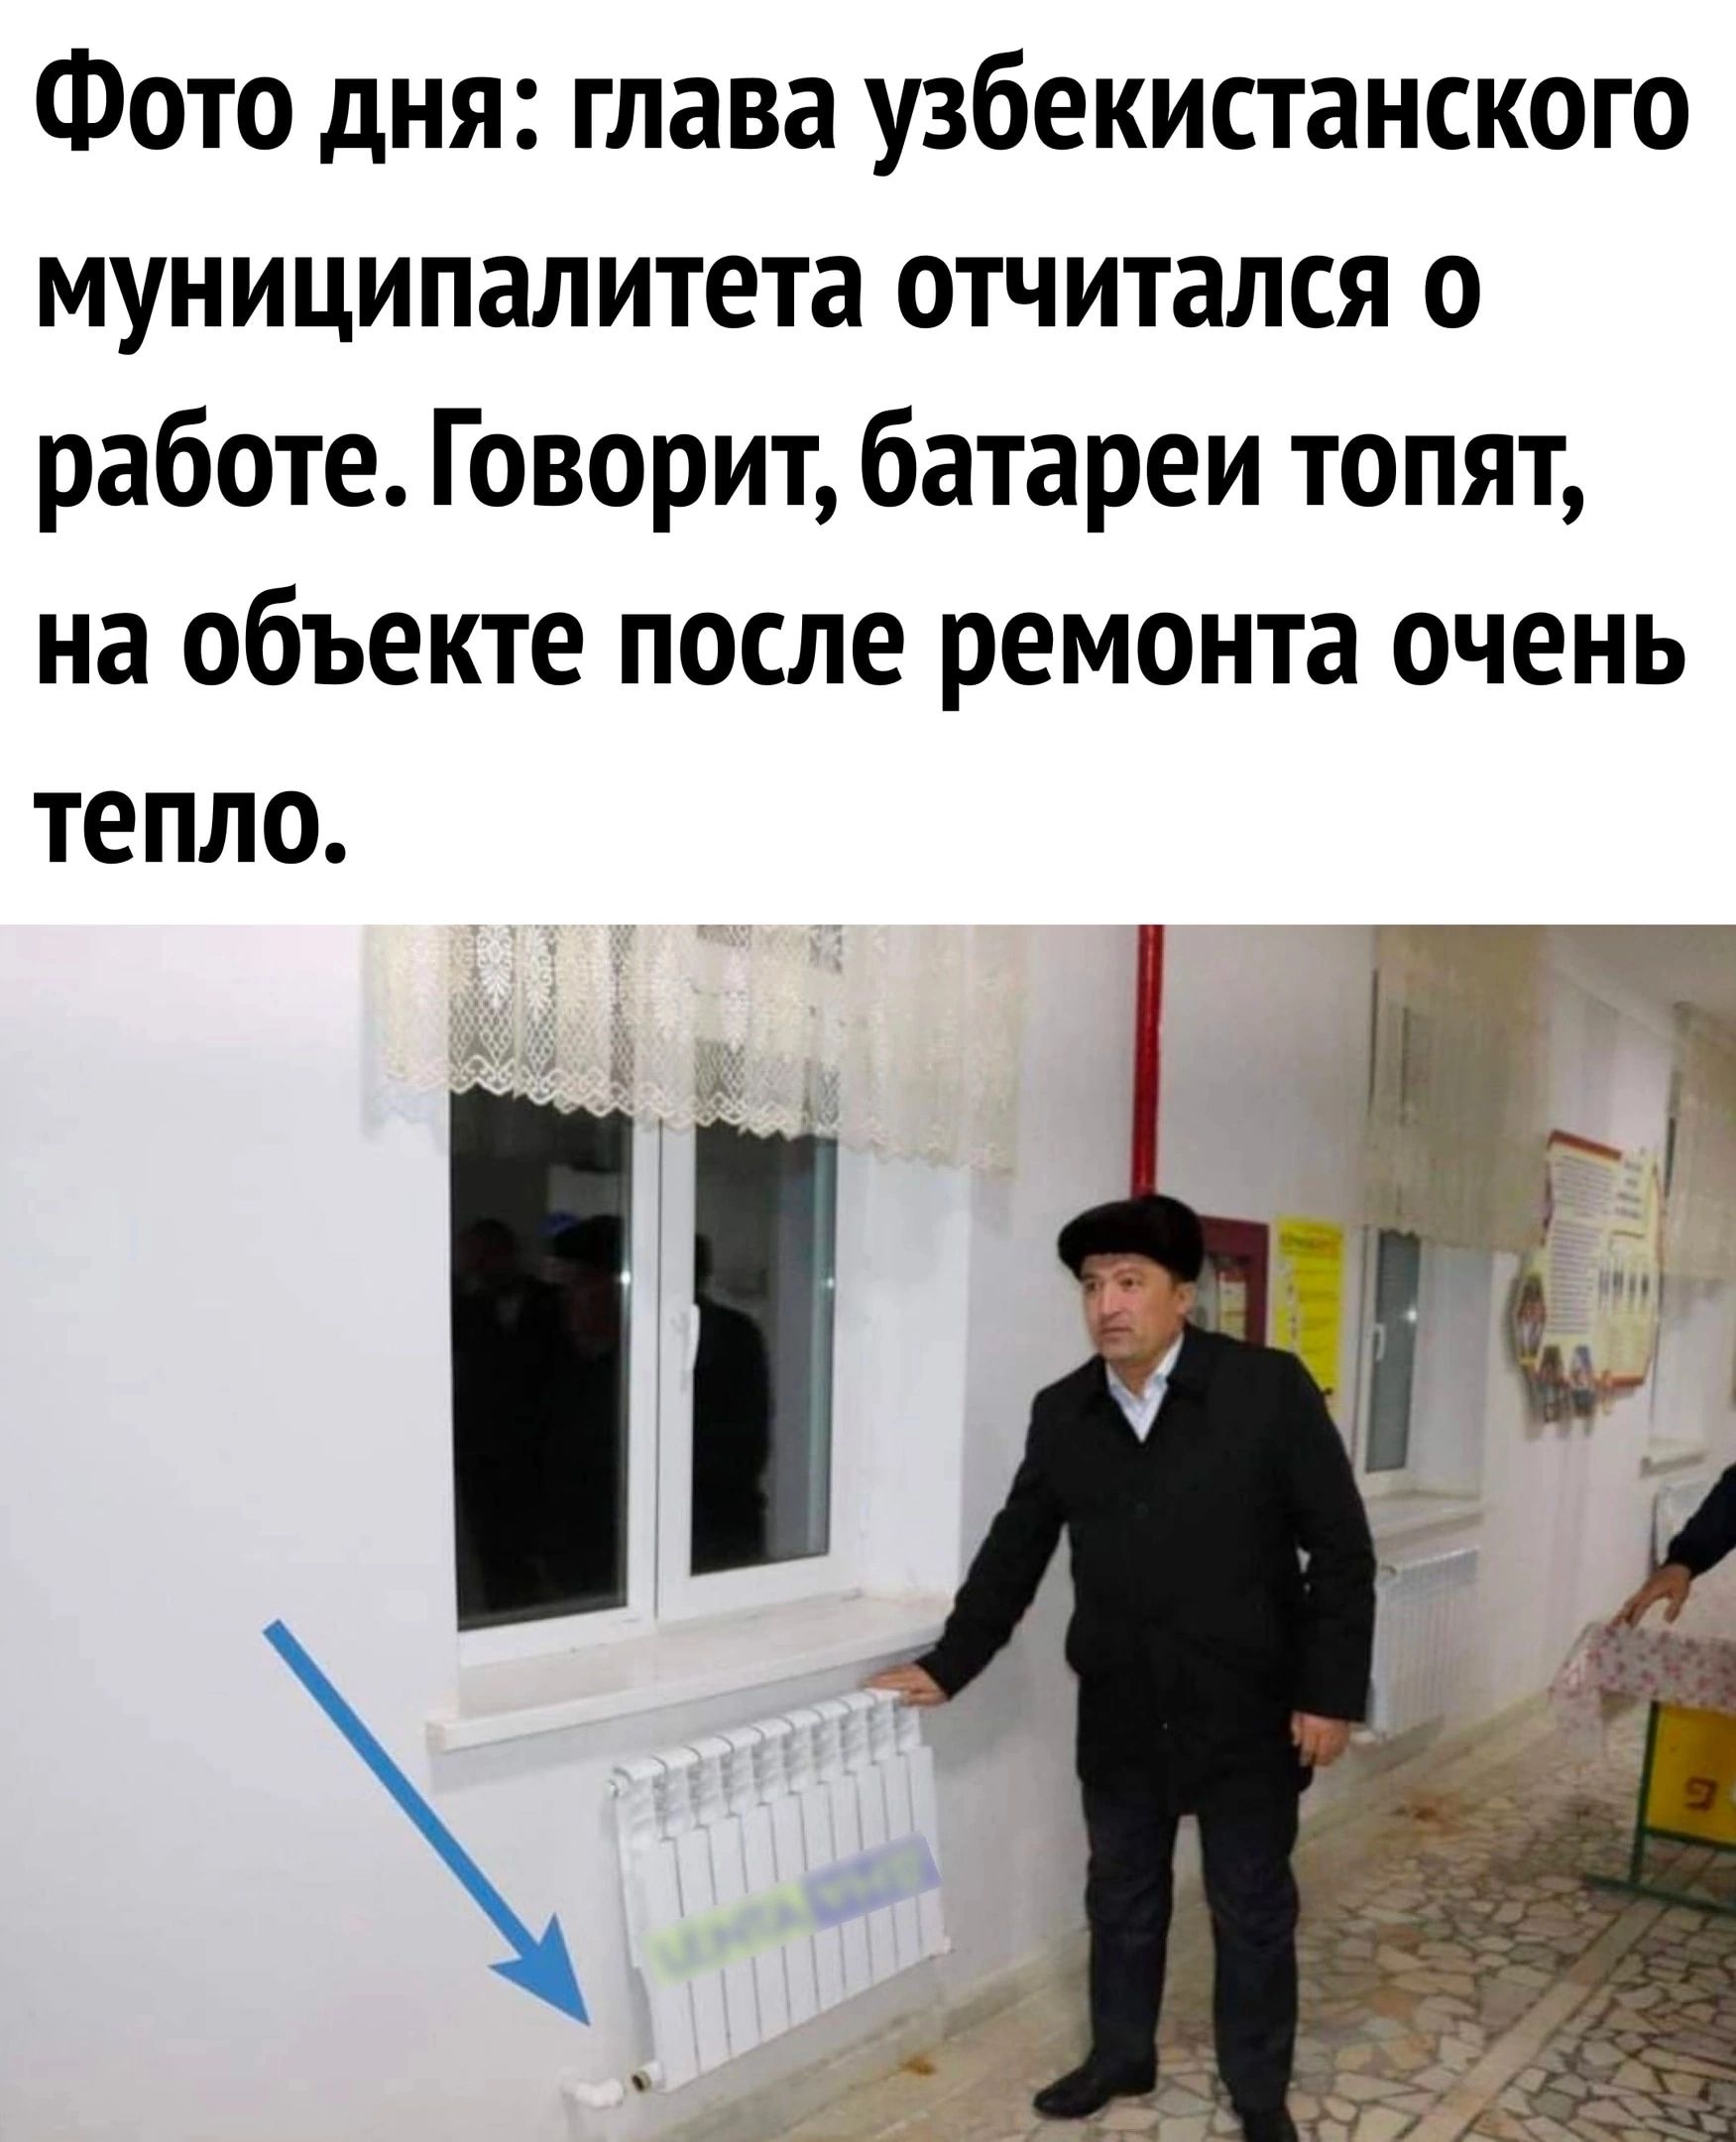 Фото дня глава узбекистанского муниципалитета отчитался о работе Говорит батареи топят на объекте после ремонта очень тепло